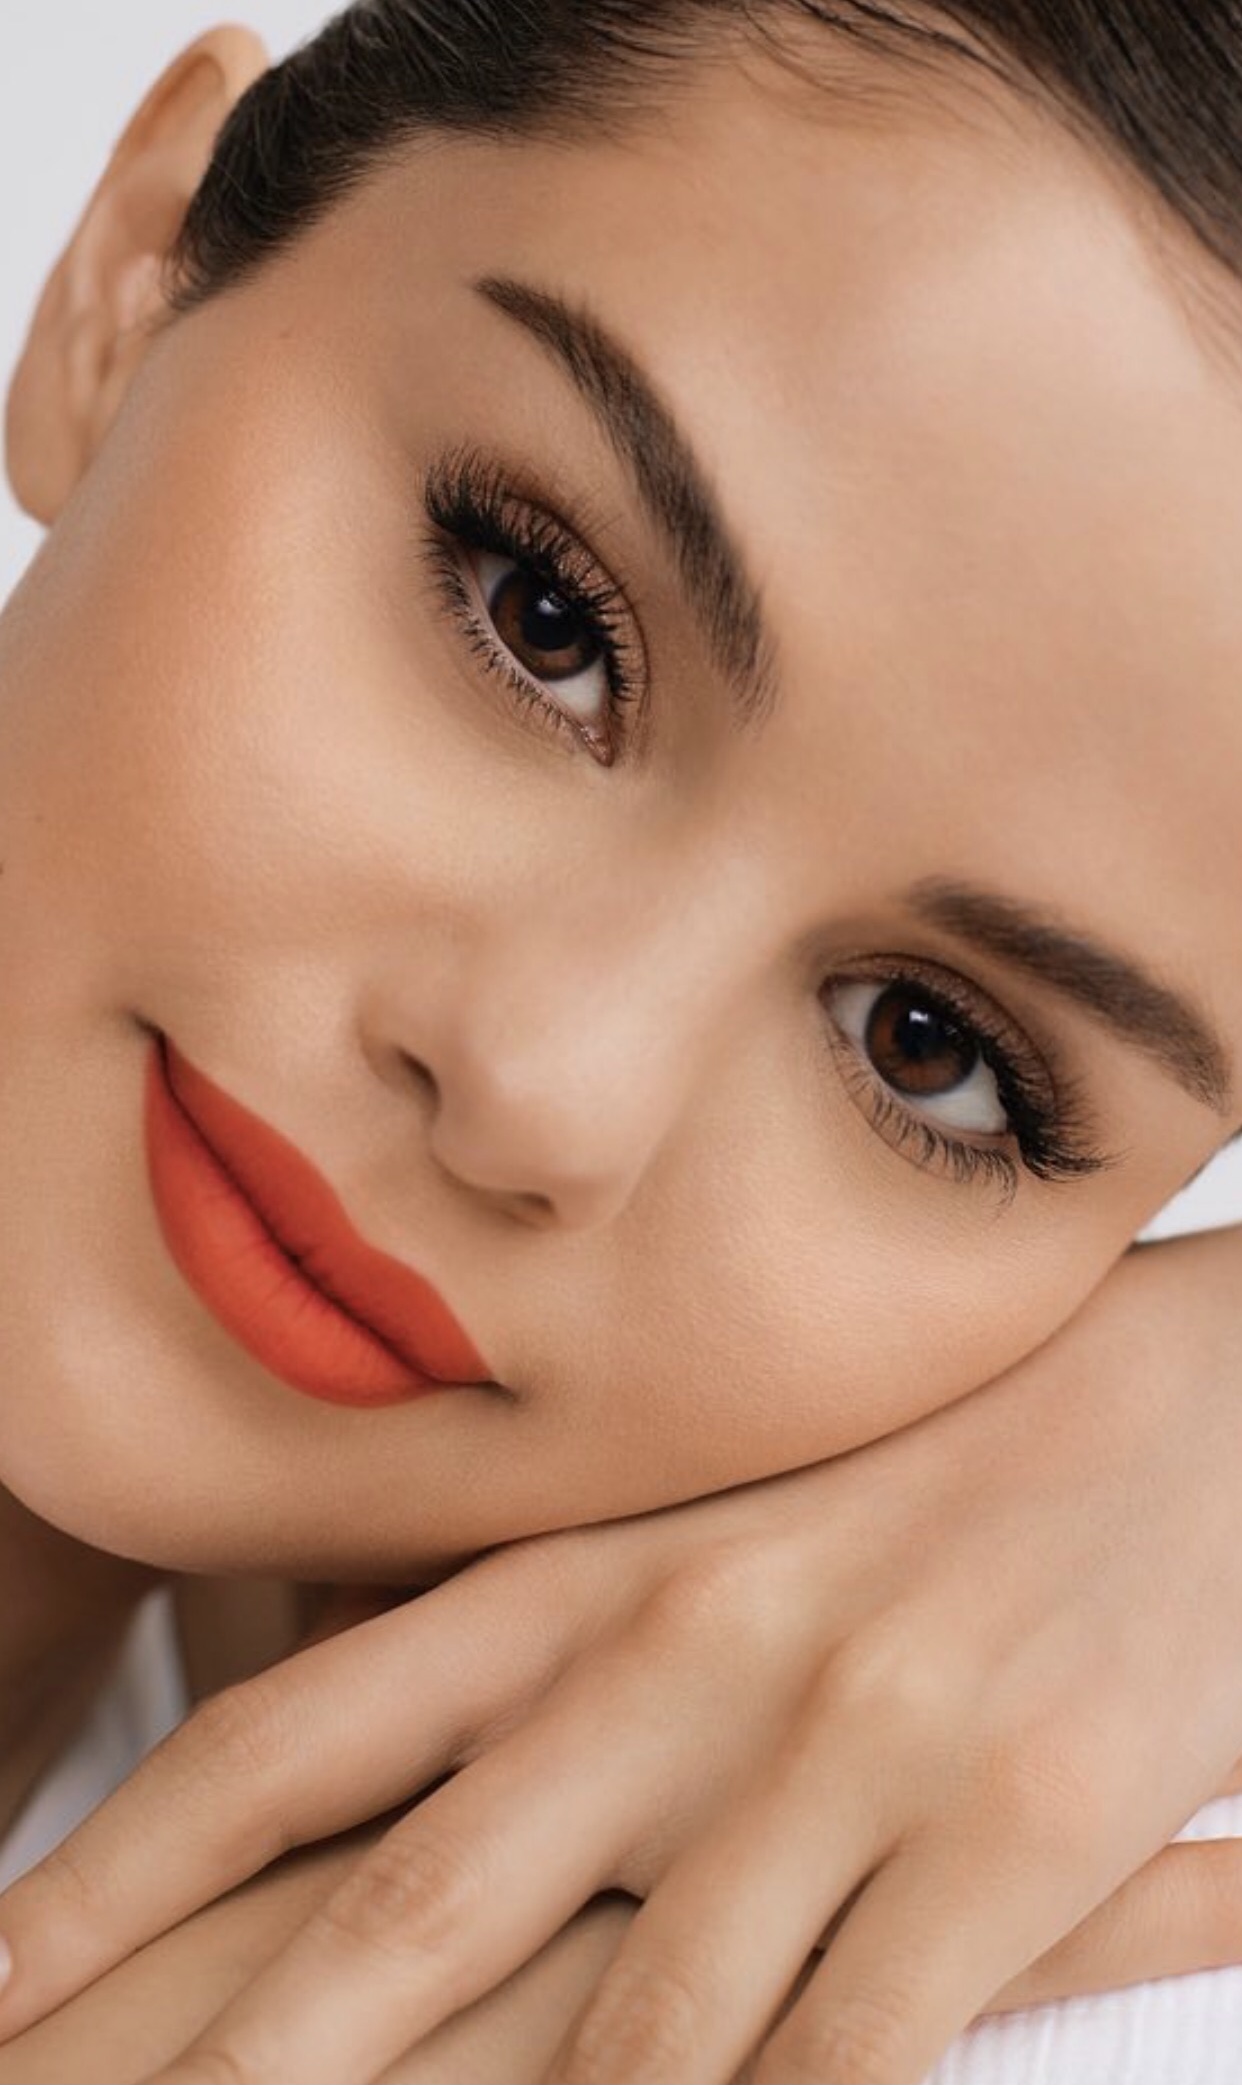  Selena Gomez Inspired Makeup Tutorial - Erika Lily Castro